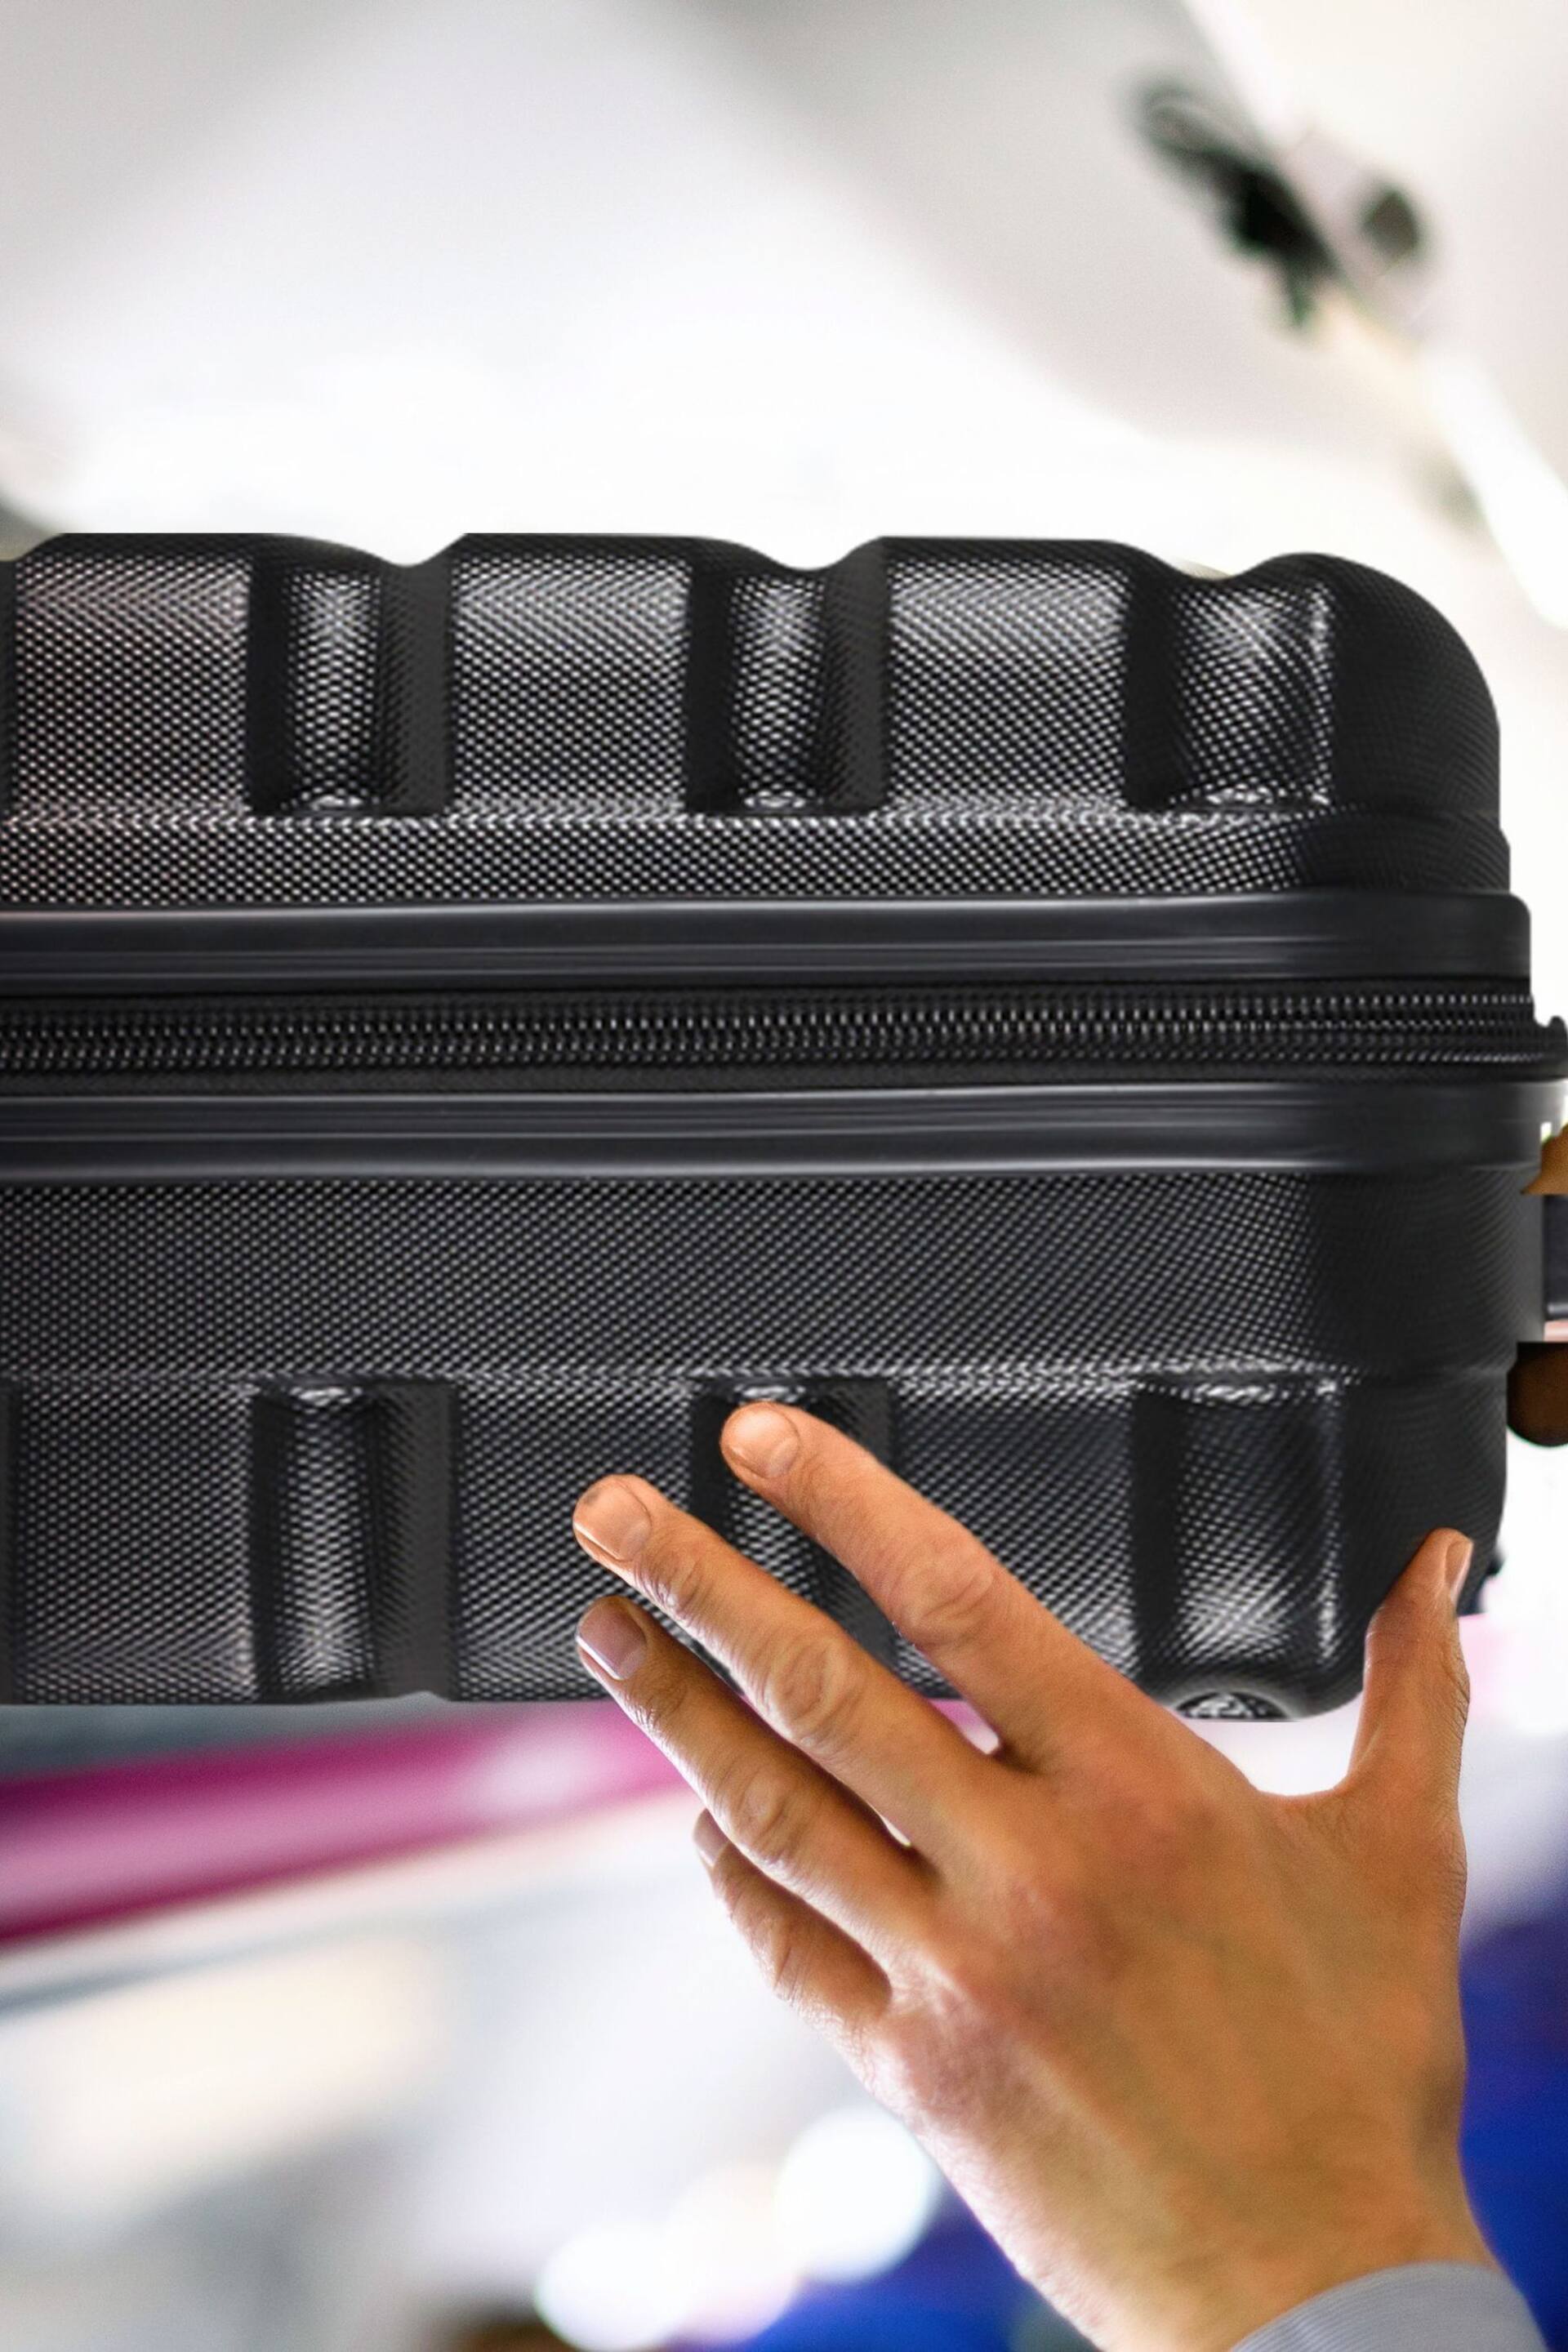 Flight Knight Hardcase Lightweight Black Suitcases Set Of 4 With 4 Wheels - Image 3 of 7